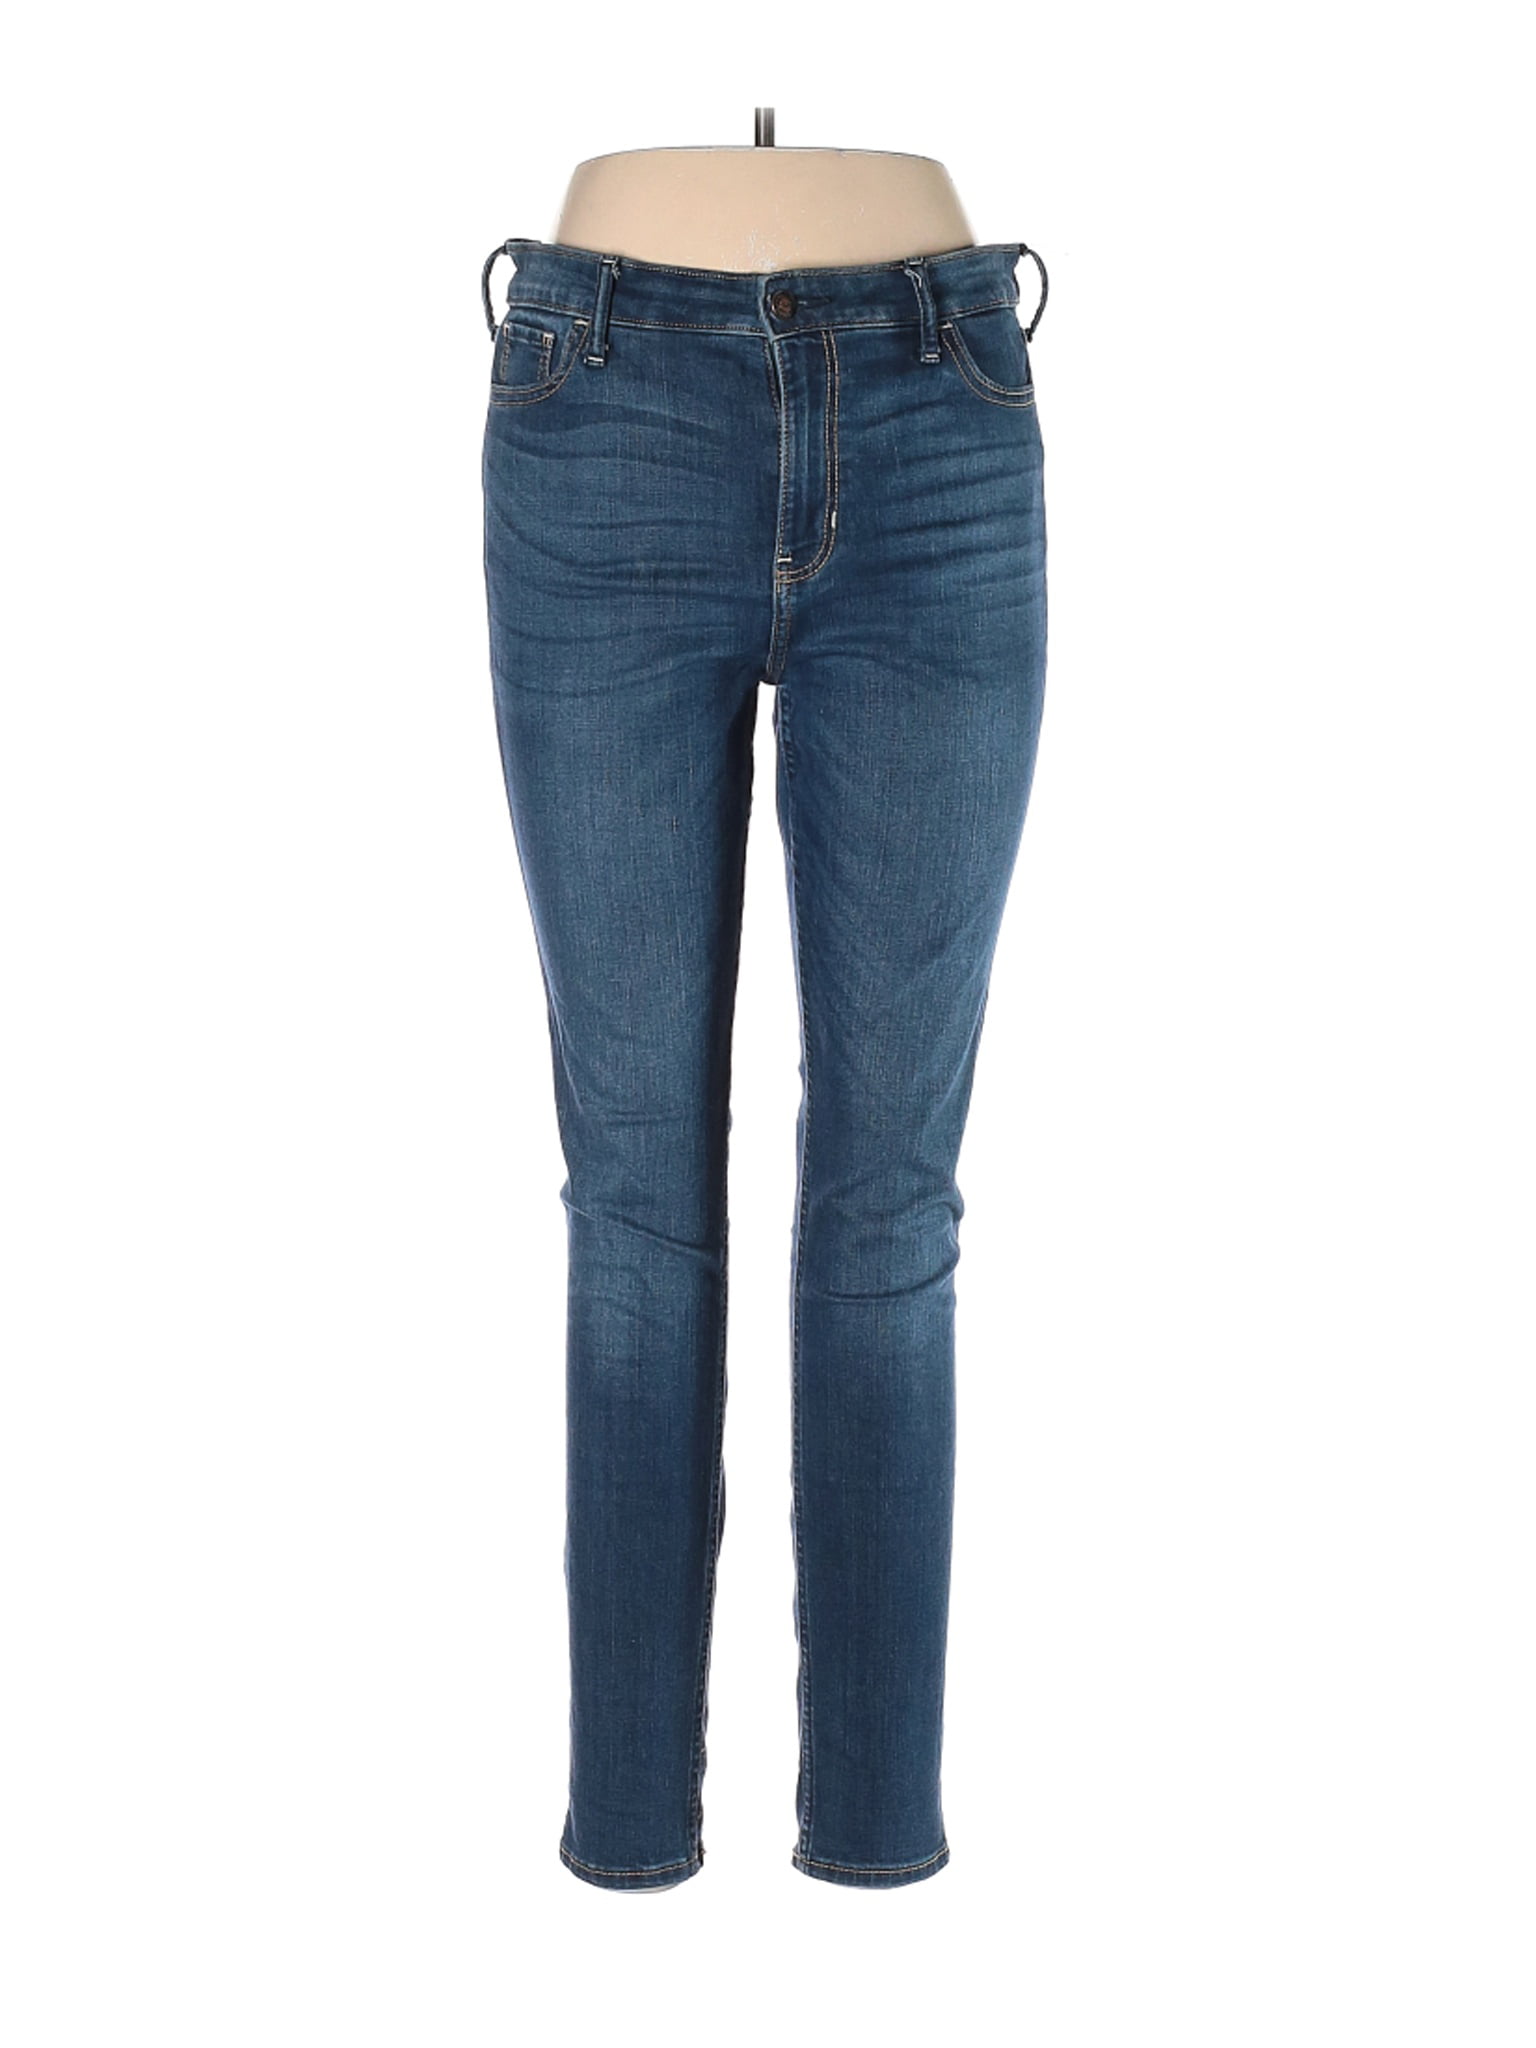 hollister size 11 jeans